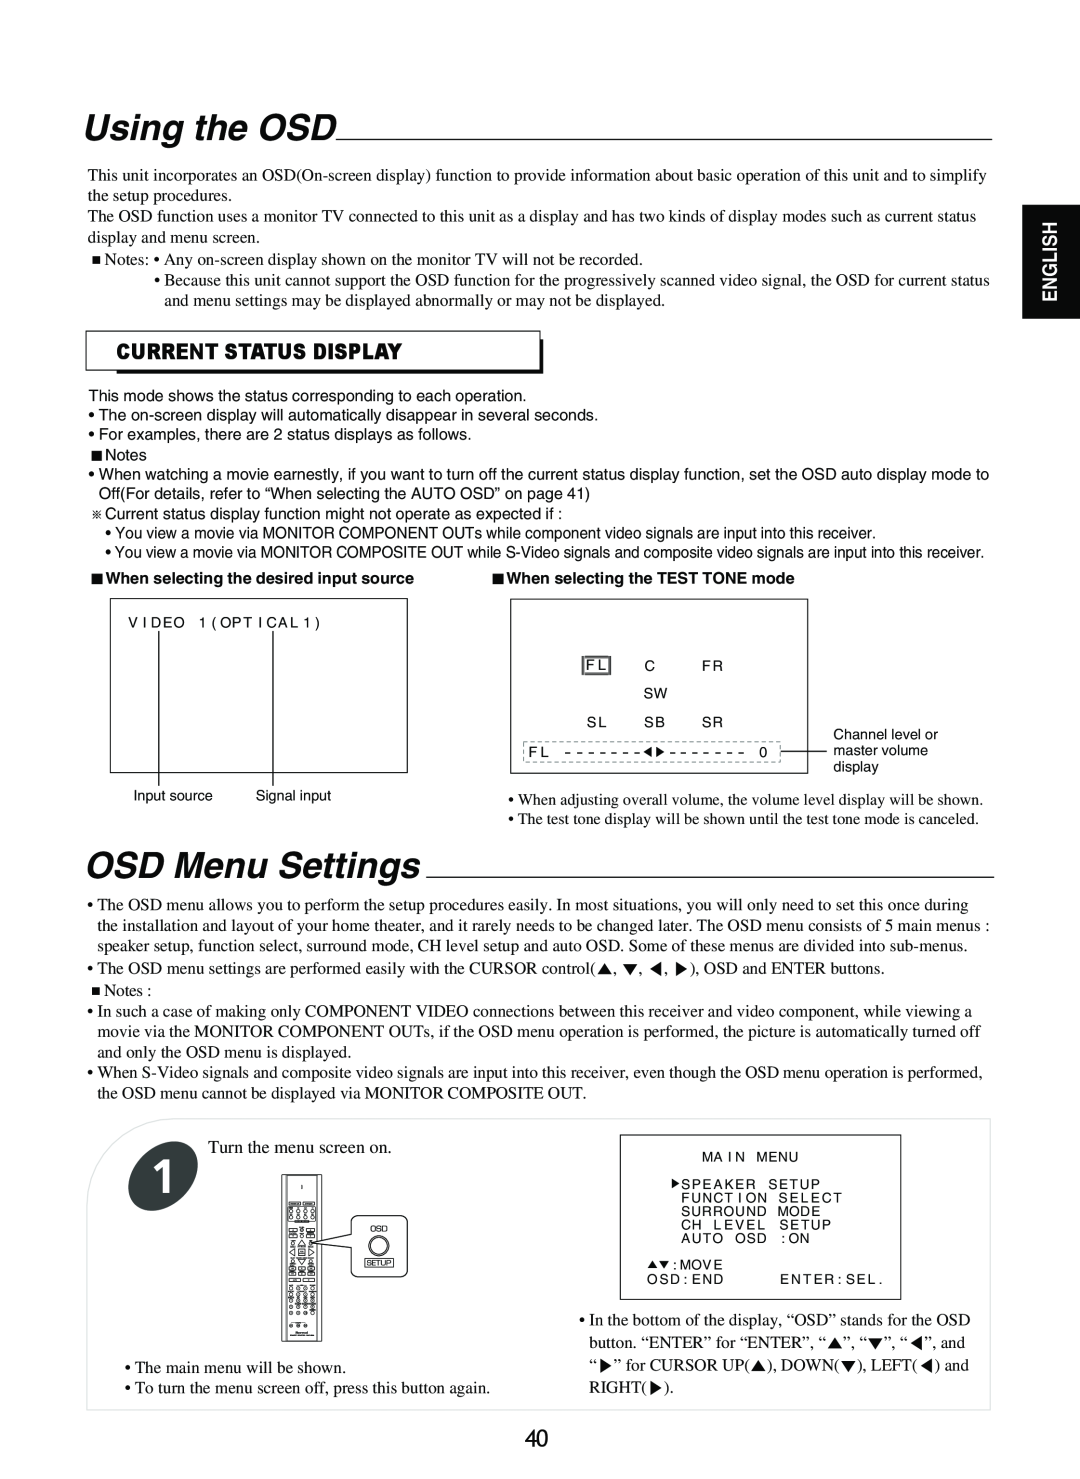 Sherwood RD-8601 operating instructions Using the OSD, OSD Menu Settings, Current Status Display, English 